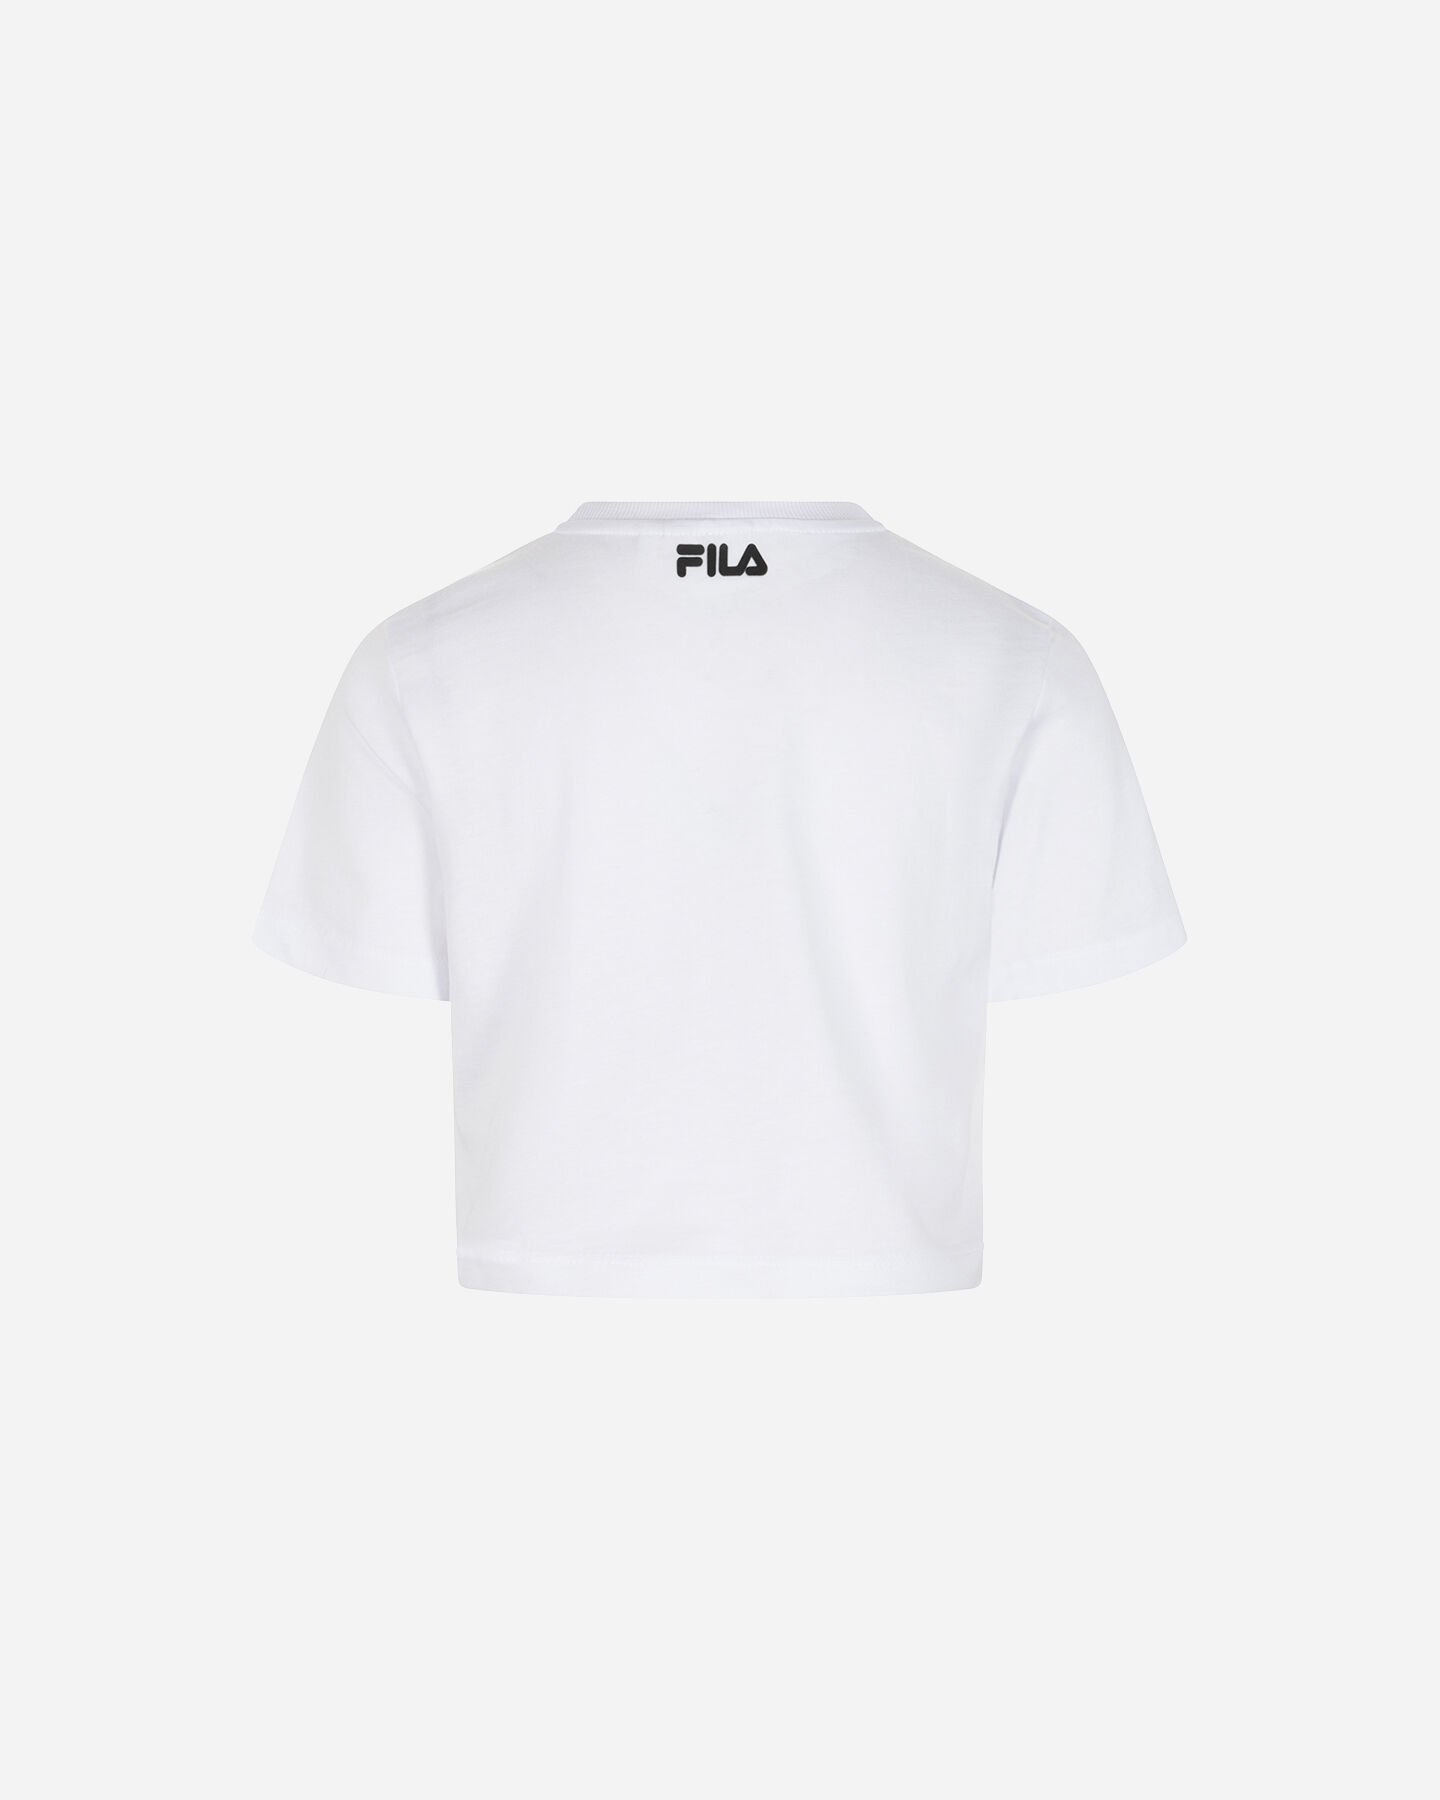  T-Shirt FILA CROP GUMMY JR S4130226|001|6A scatto 1